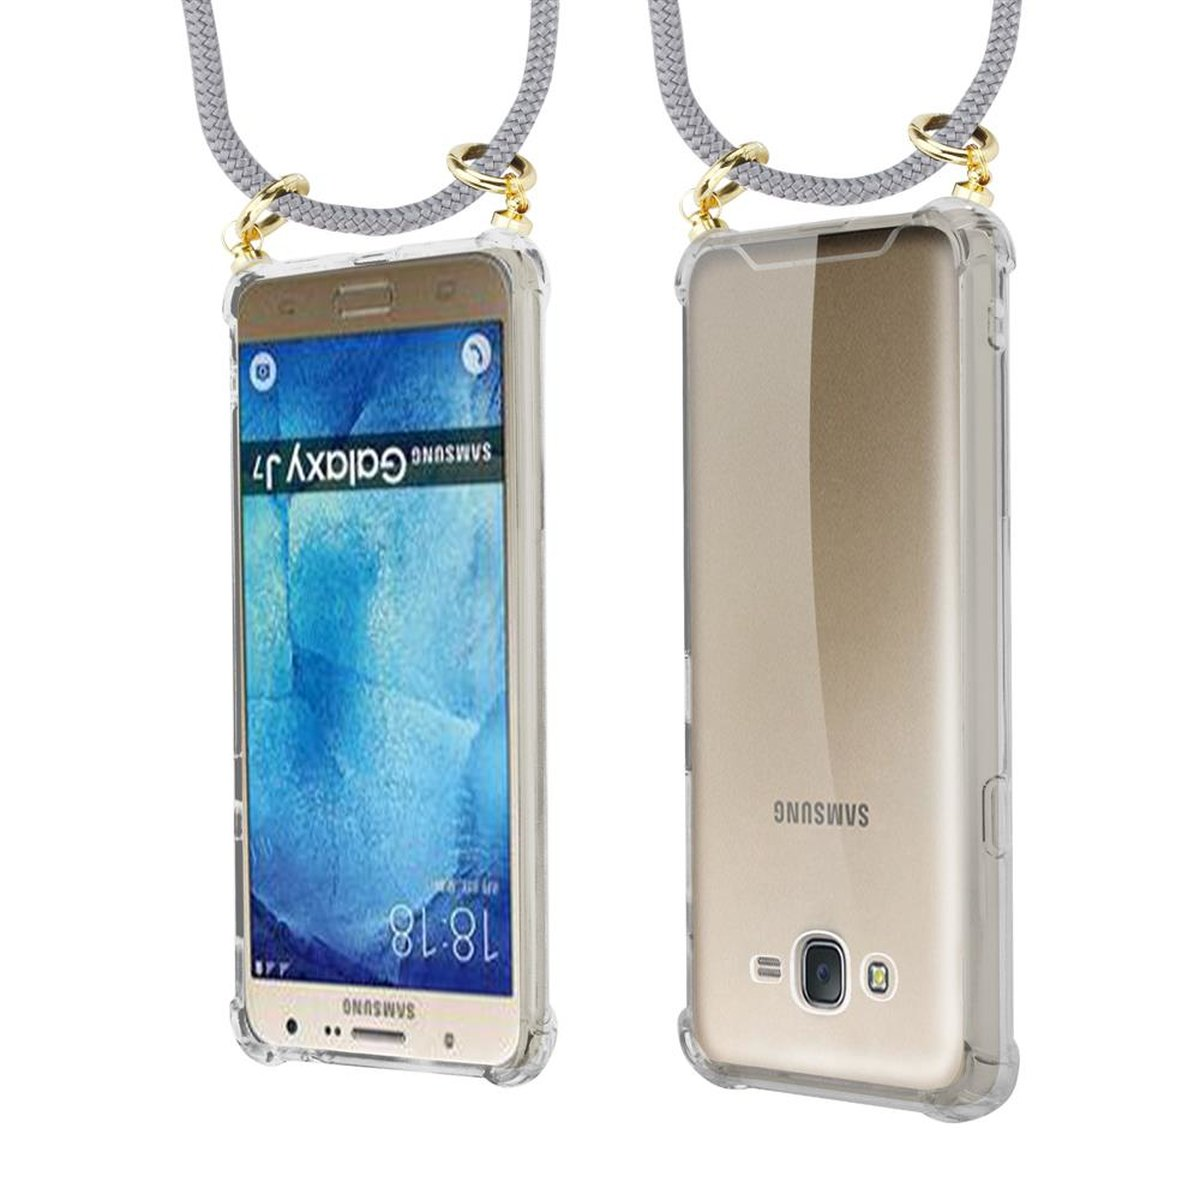 Galaxy GRAU Samsung, J7 abnehmbarer Ringen, Gold CADORABO Backcover, und 2015, Hülle, Kette mit Band SILBER Handy Kordel